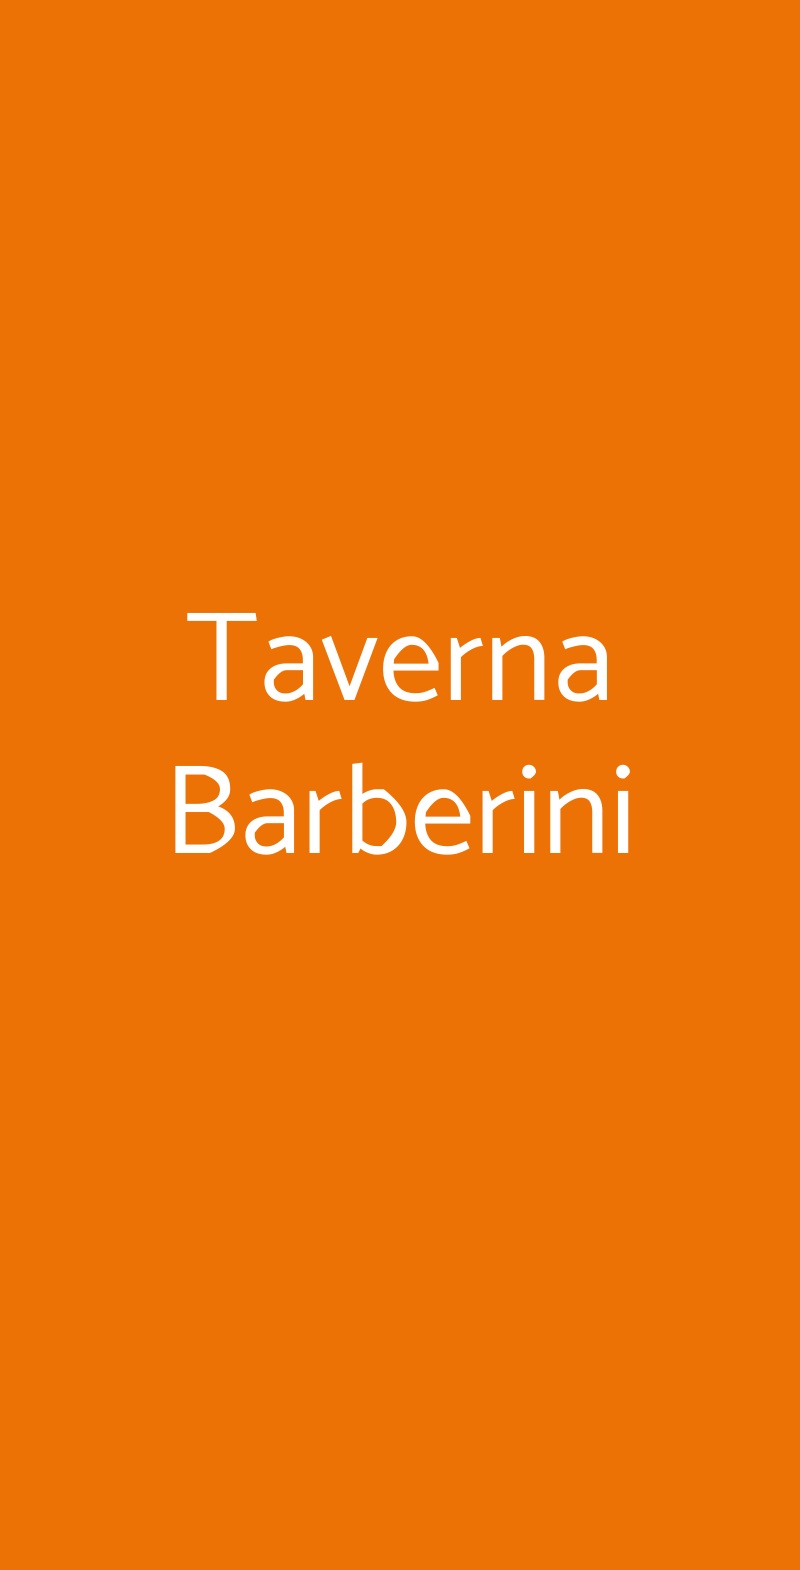 Taverna Barberini Roma menù 1 pagina